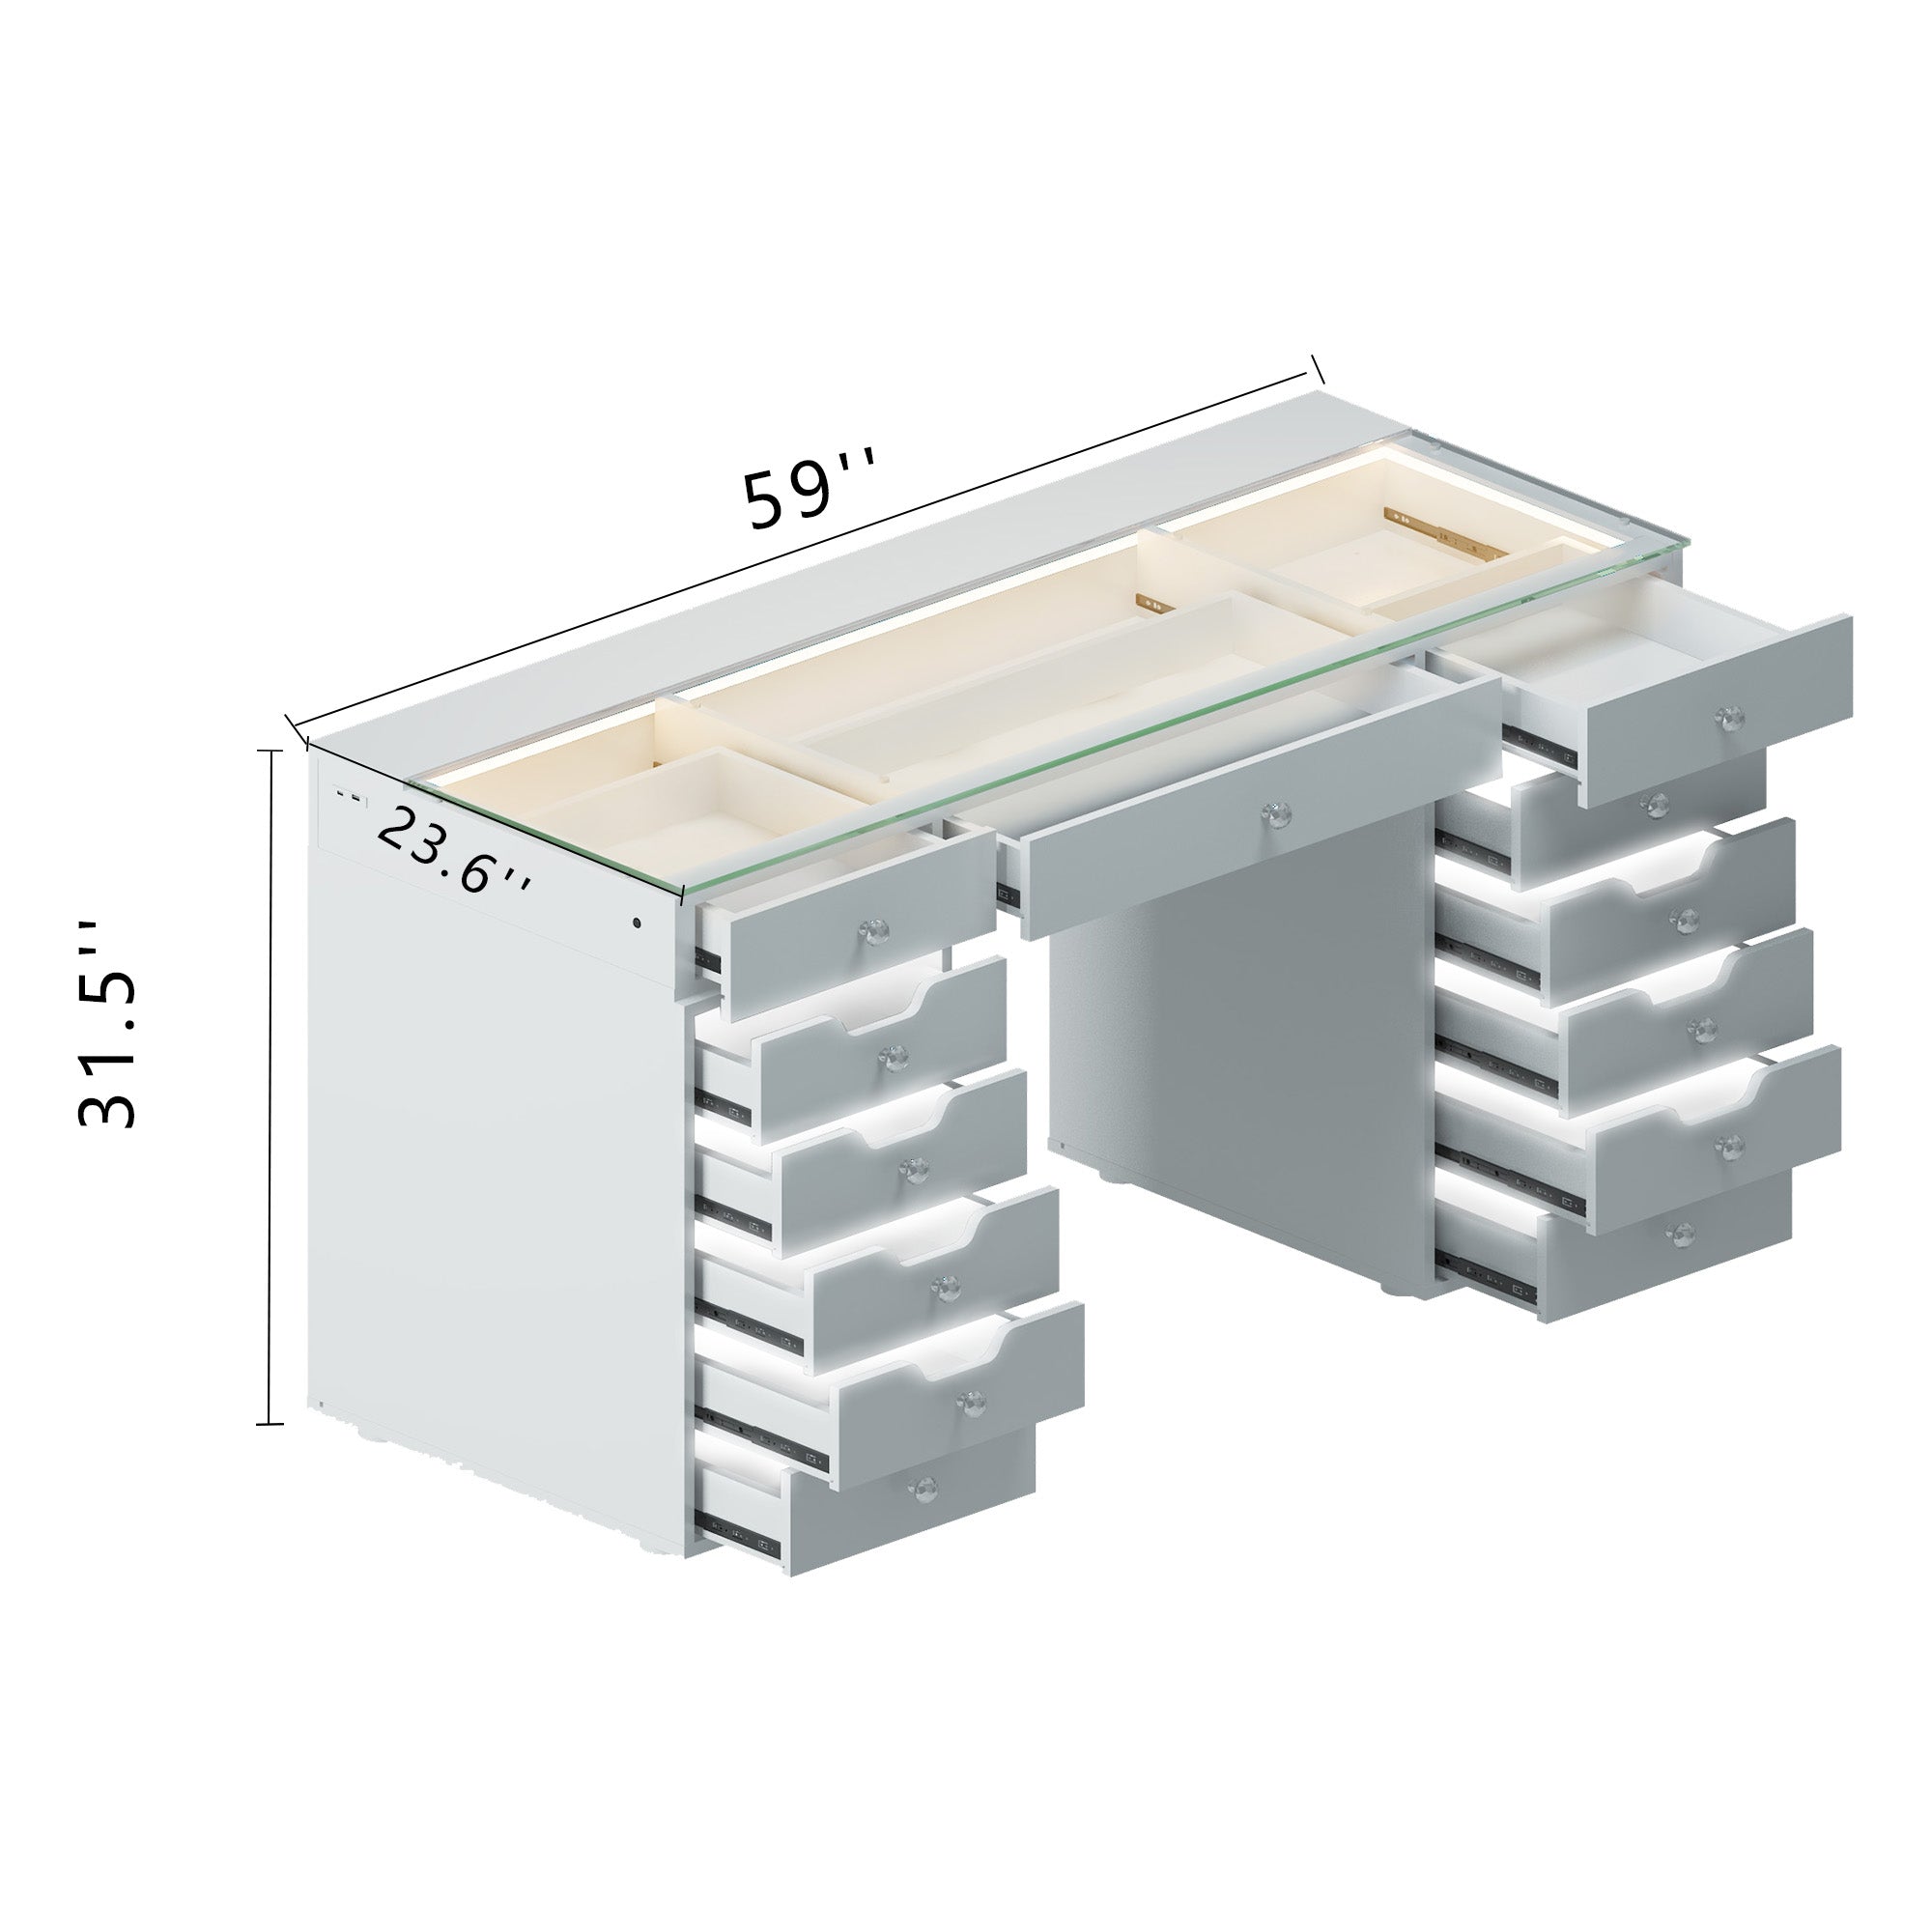 VANITII Eva Vanity Desk  - 13 Storage Drawers with Full Light